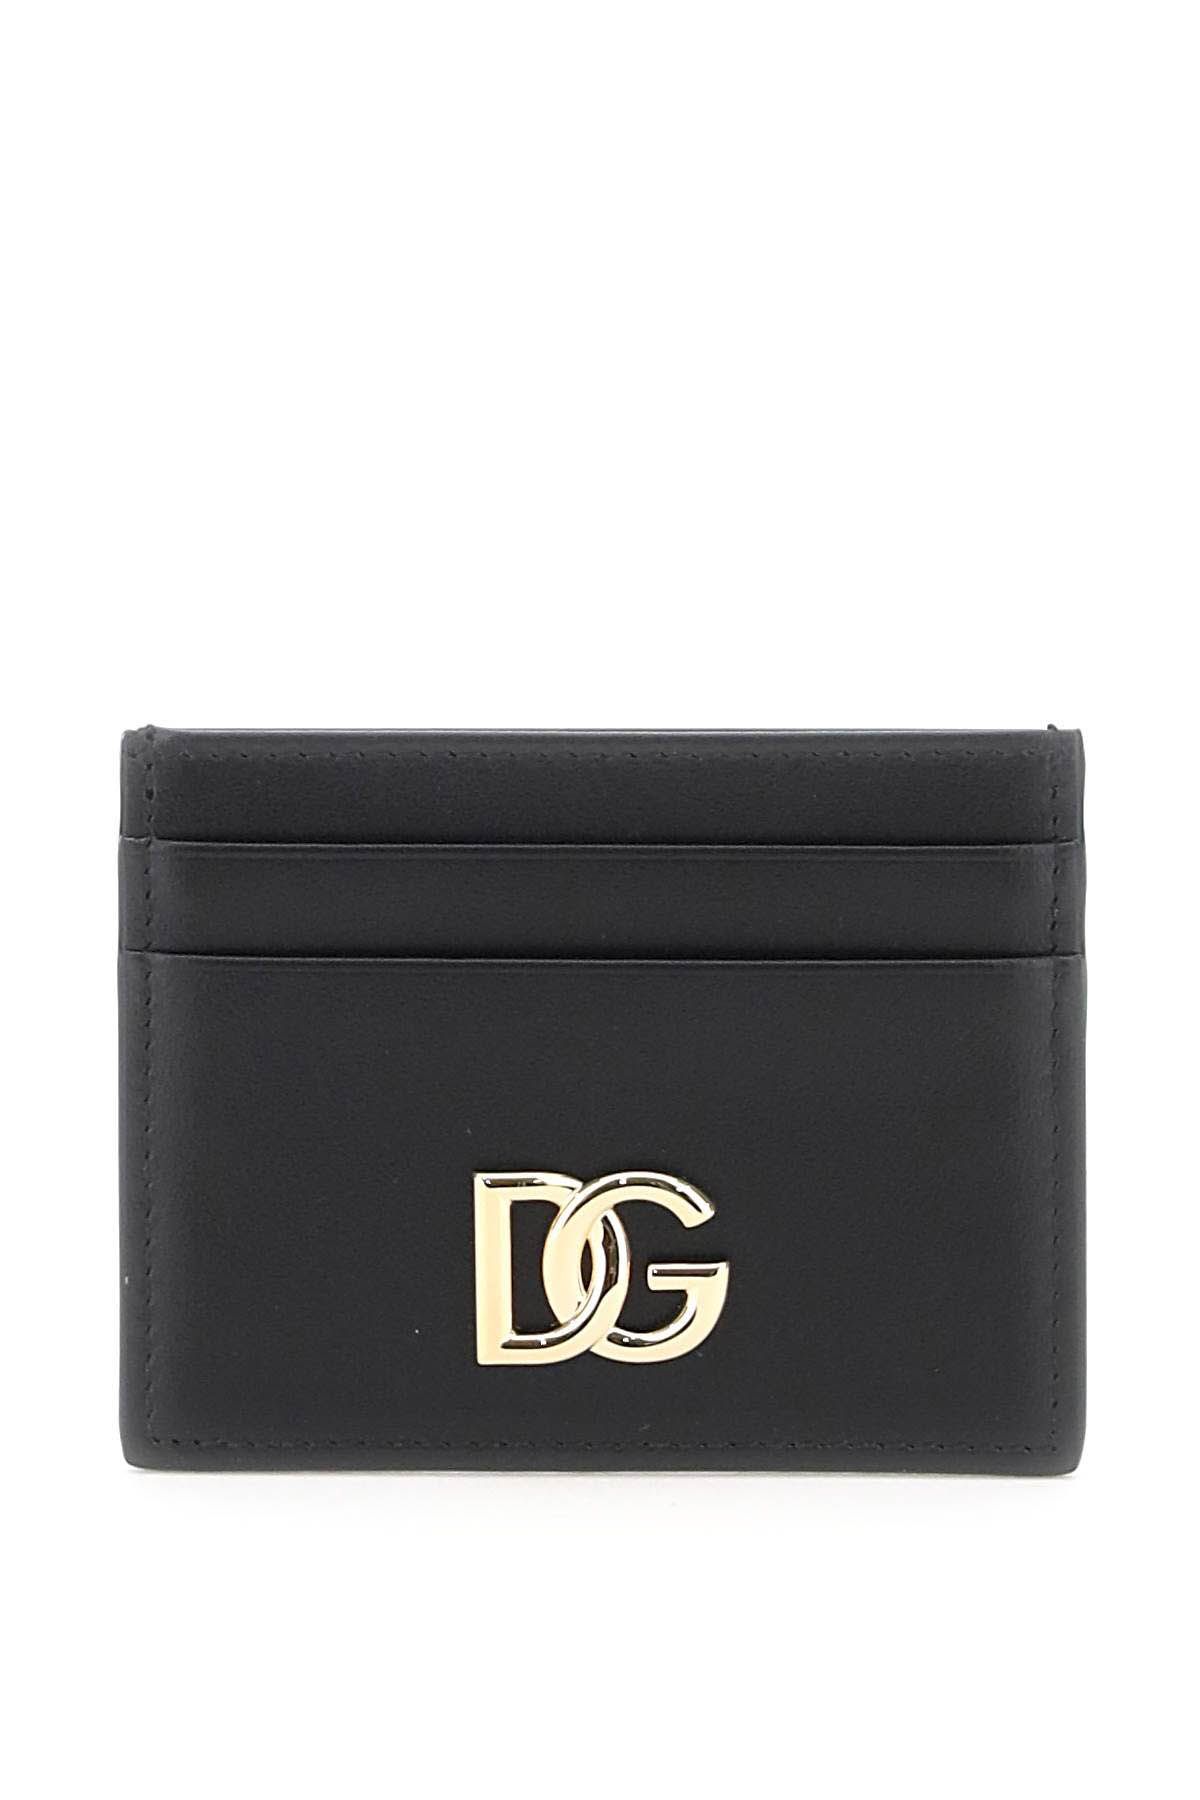 Dolce & Gabbana Dg Card Holder In Black